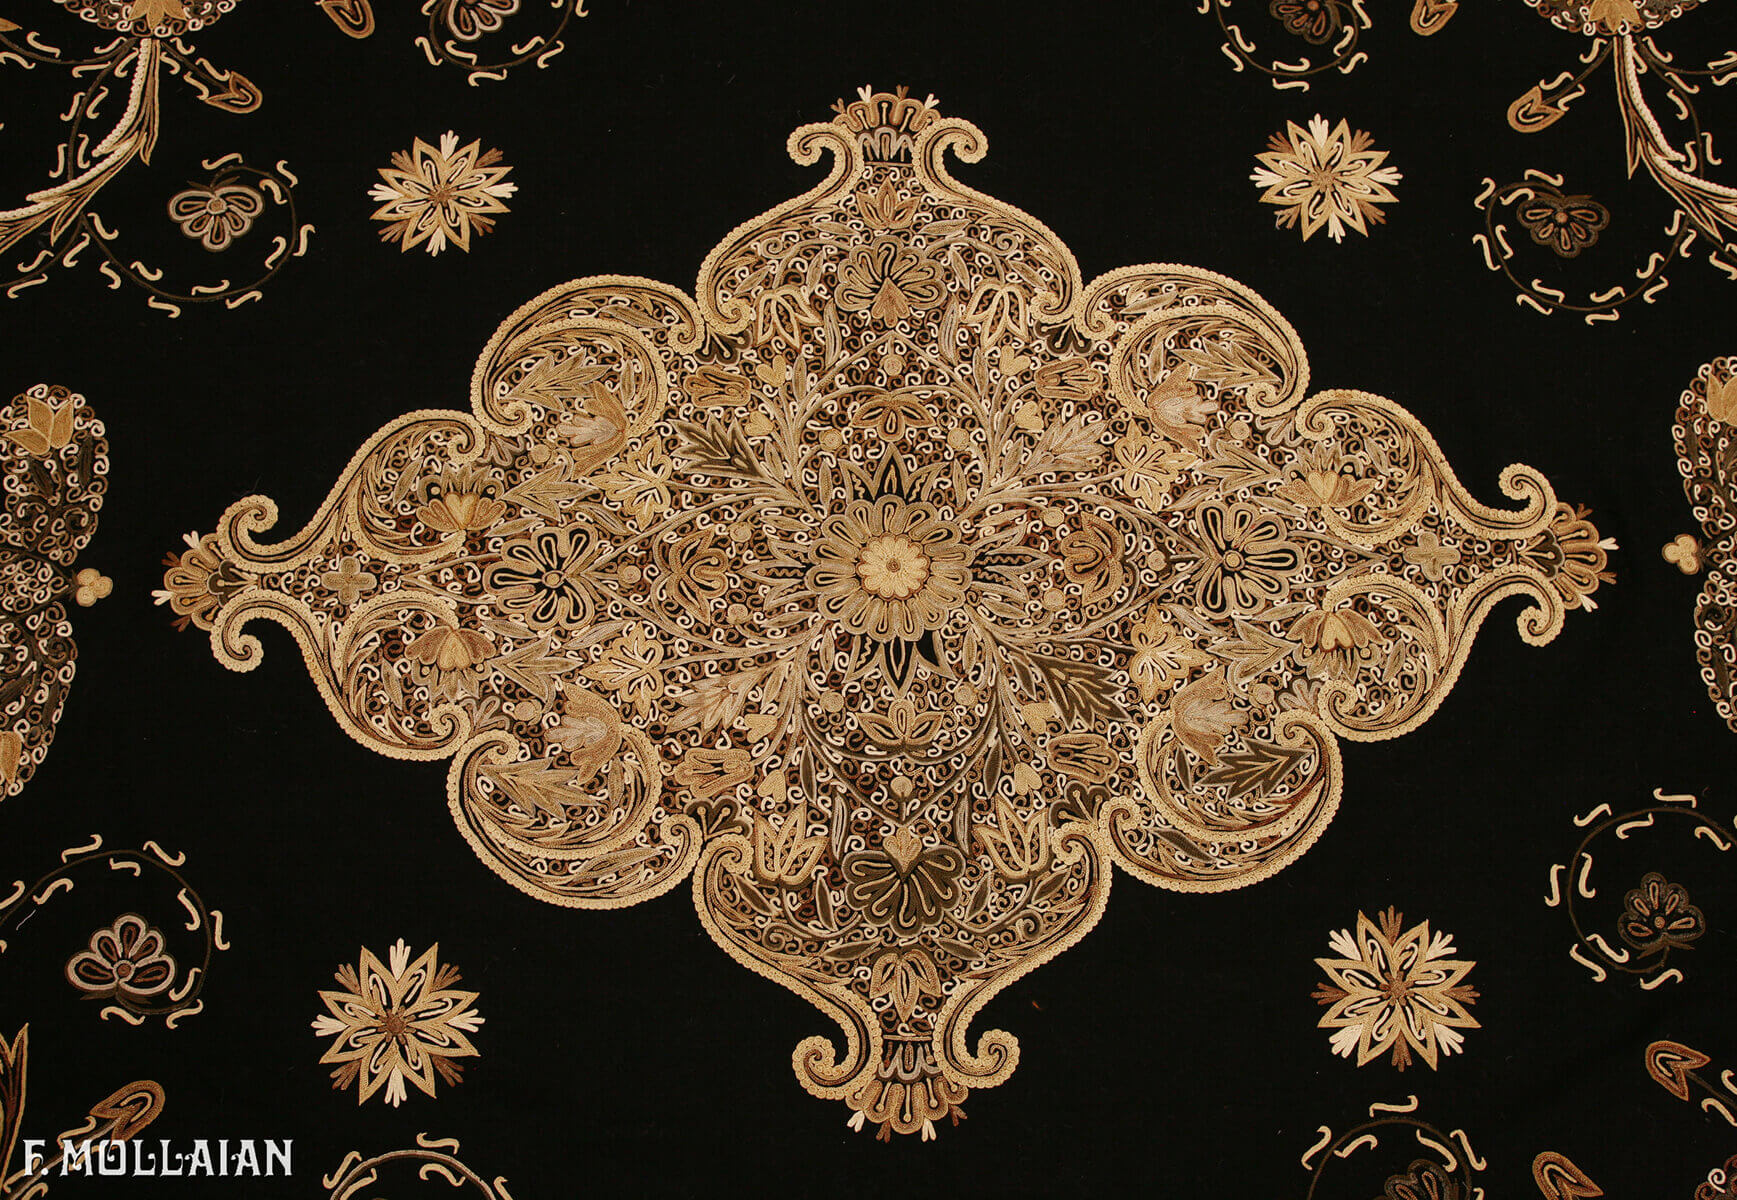 Textile Persan Antique Rashti-Duzi n°:13644414